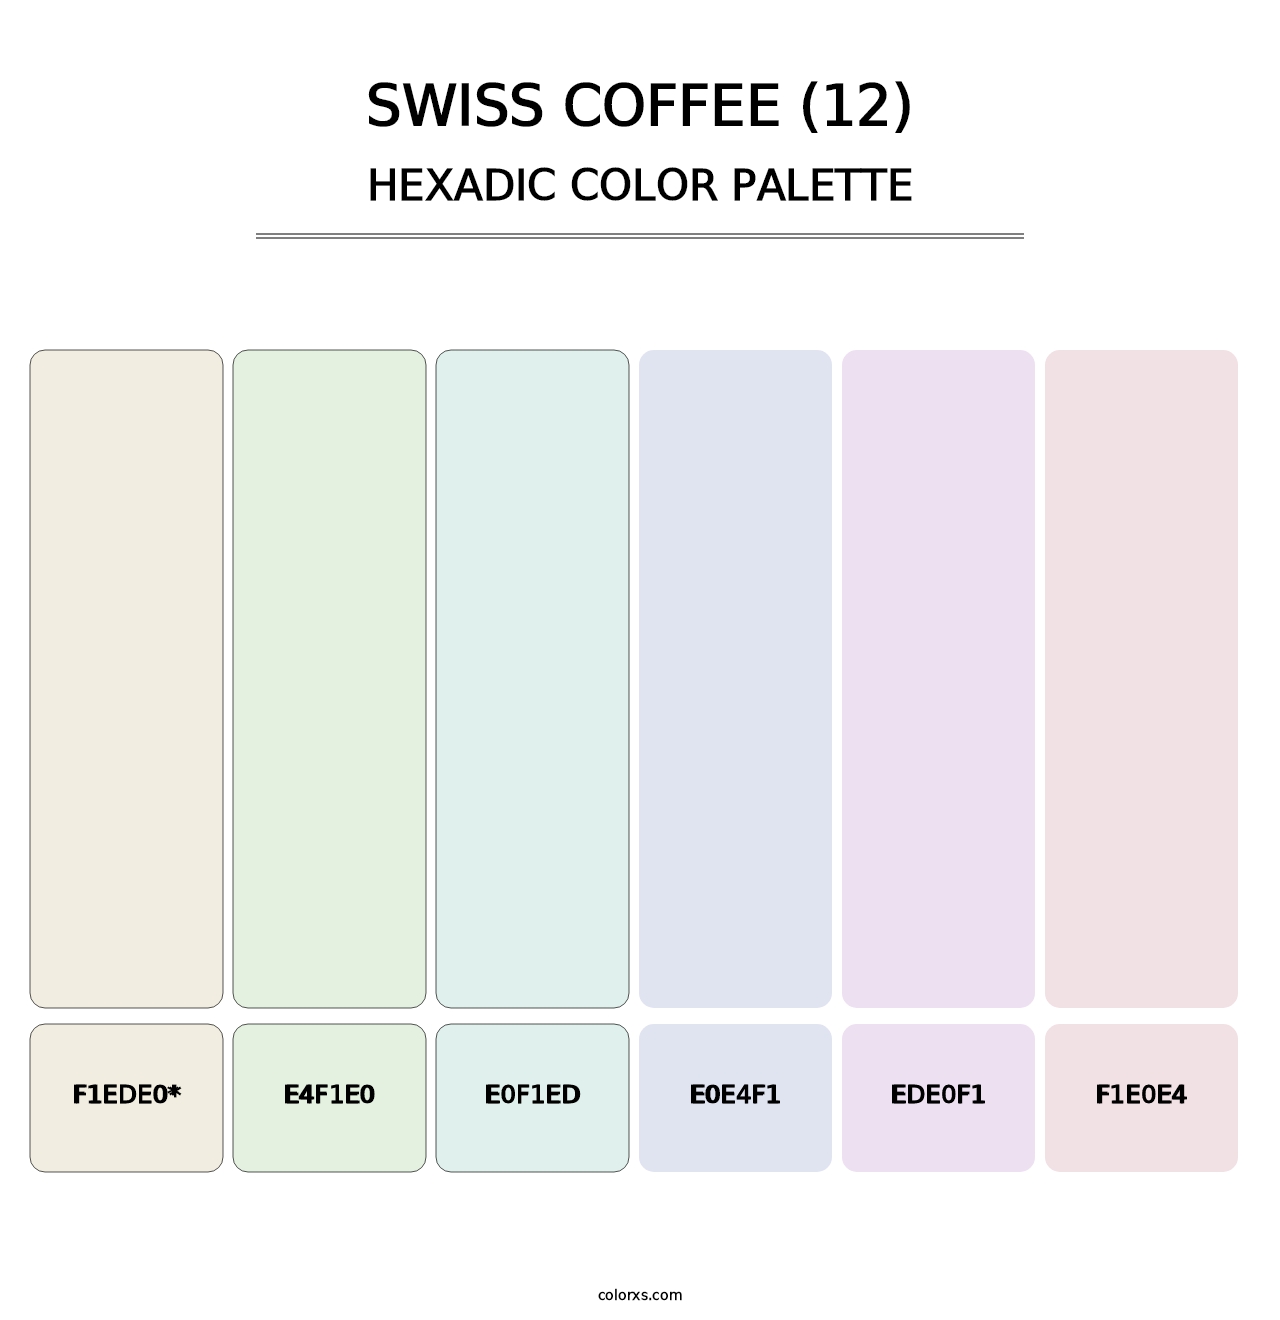 Swiss Coffee (12) - Hexadic Color Palette